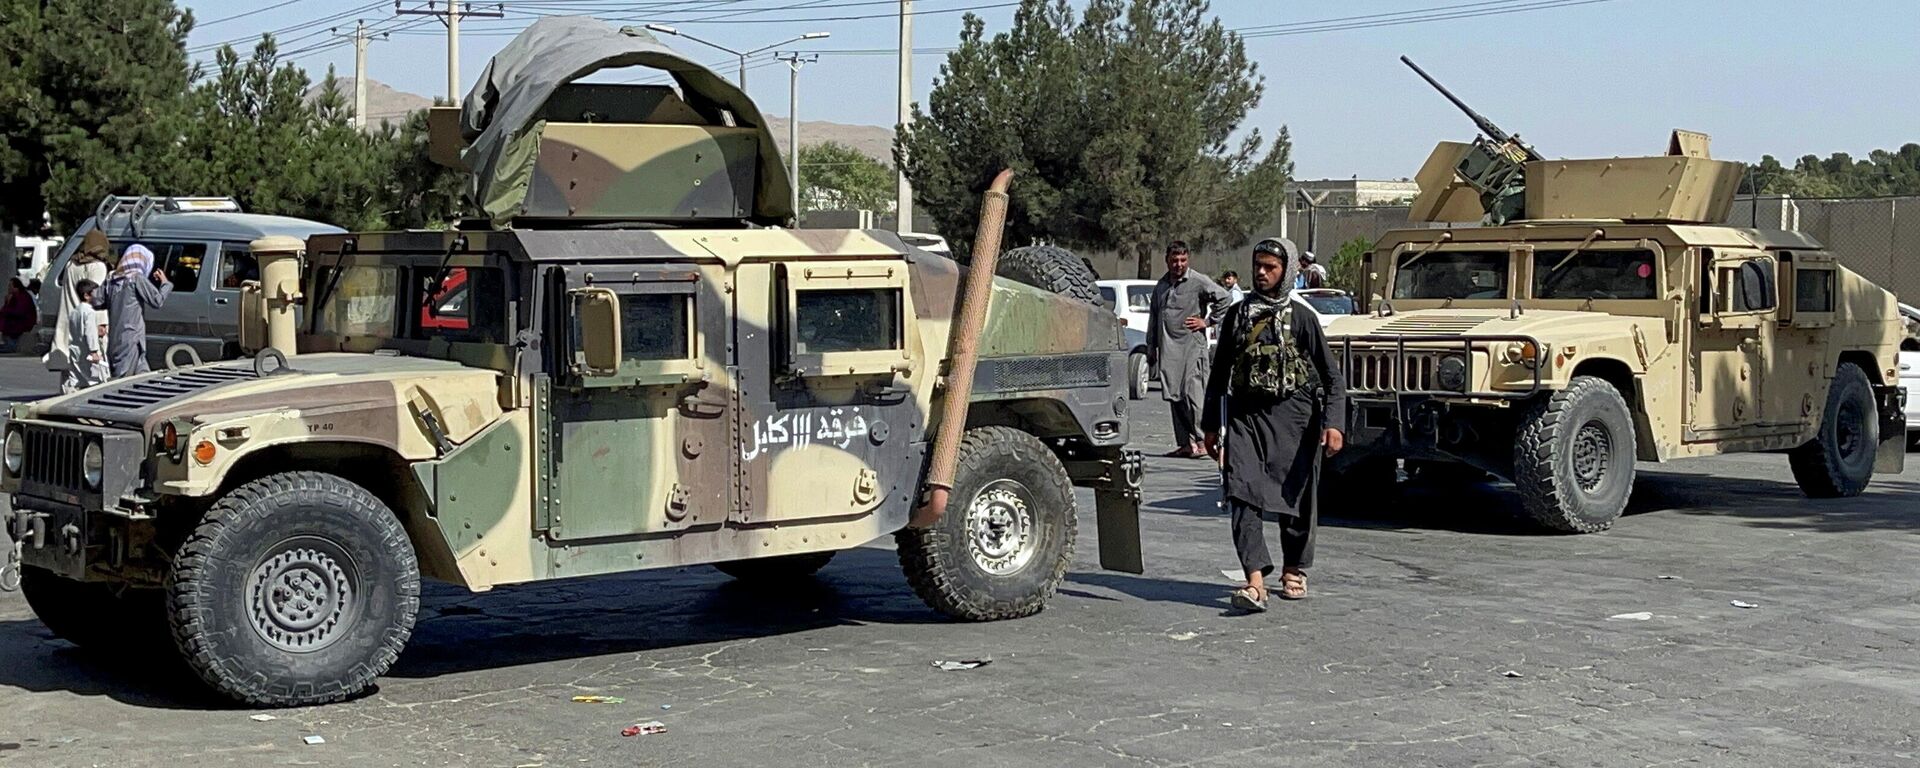 Силы талибов блокировали дорогу в аэропорт Кабула, Афганистан - Sputnik Latvija, 1920, 01.09.2021